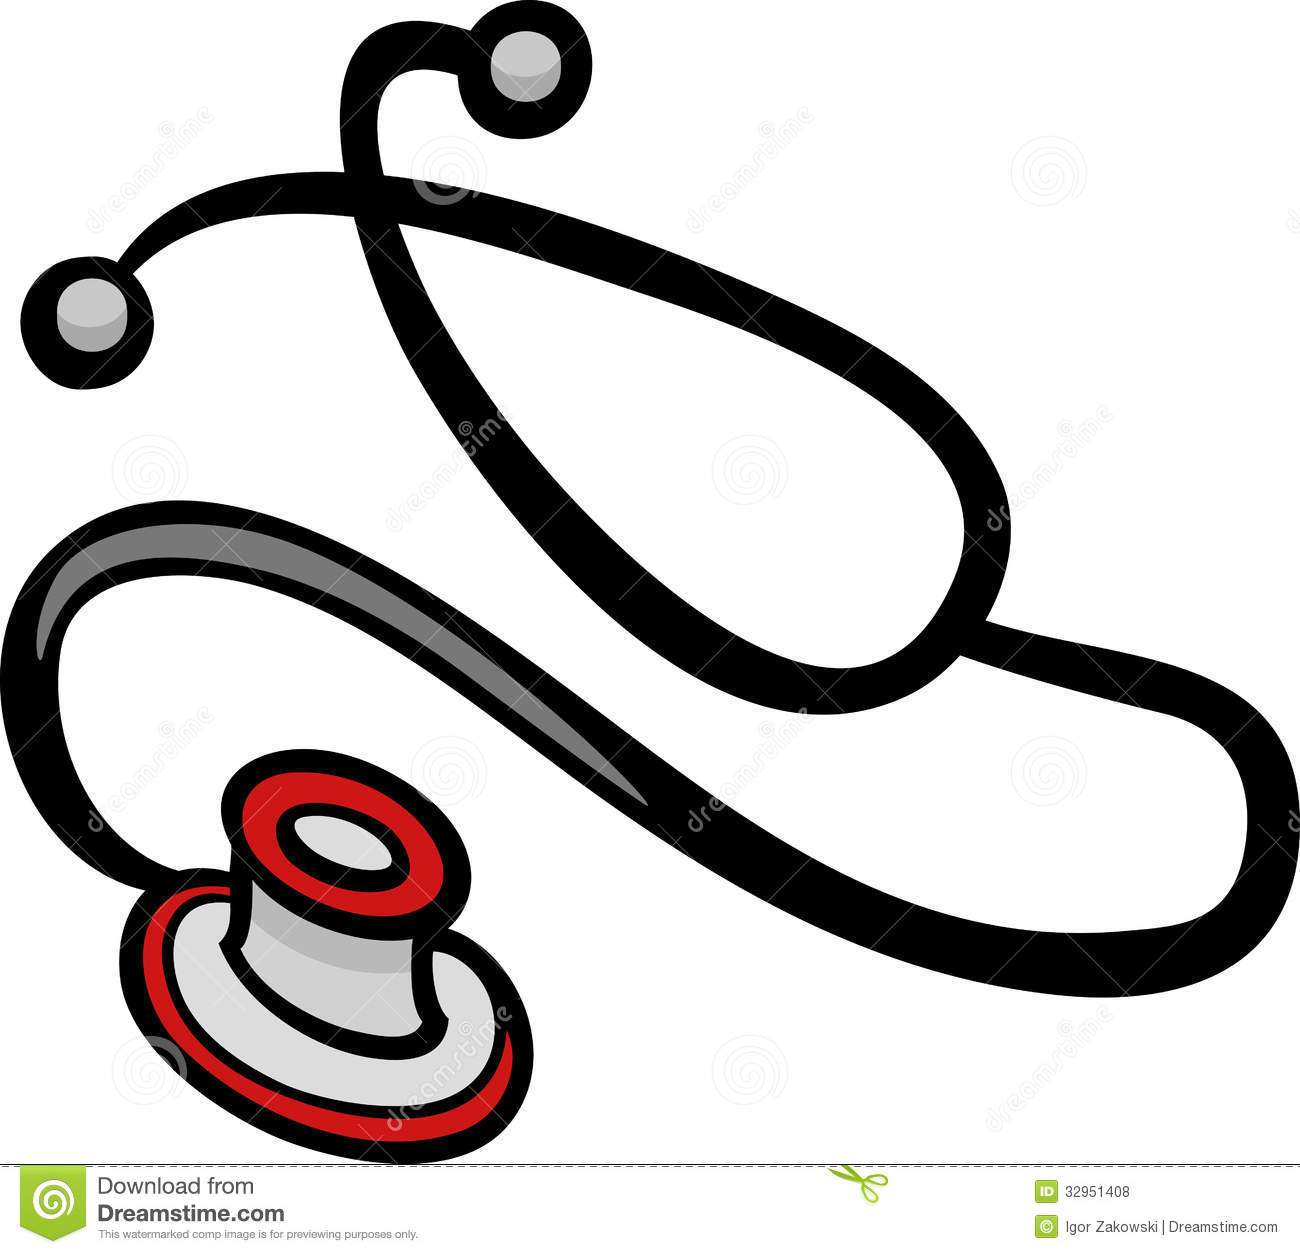 Stethoscope clip art cartoon illustration